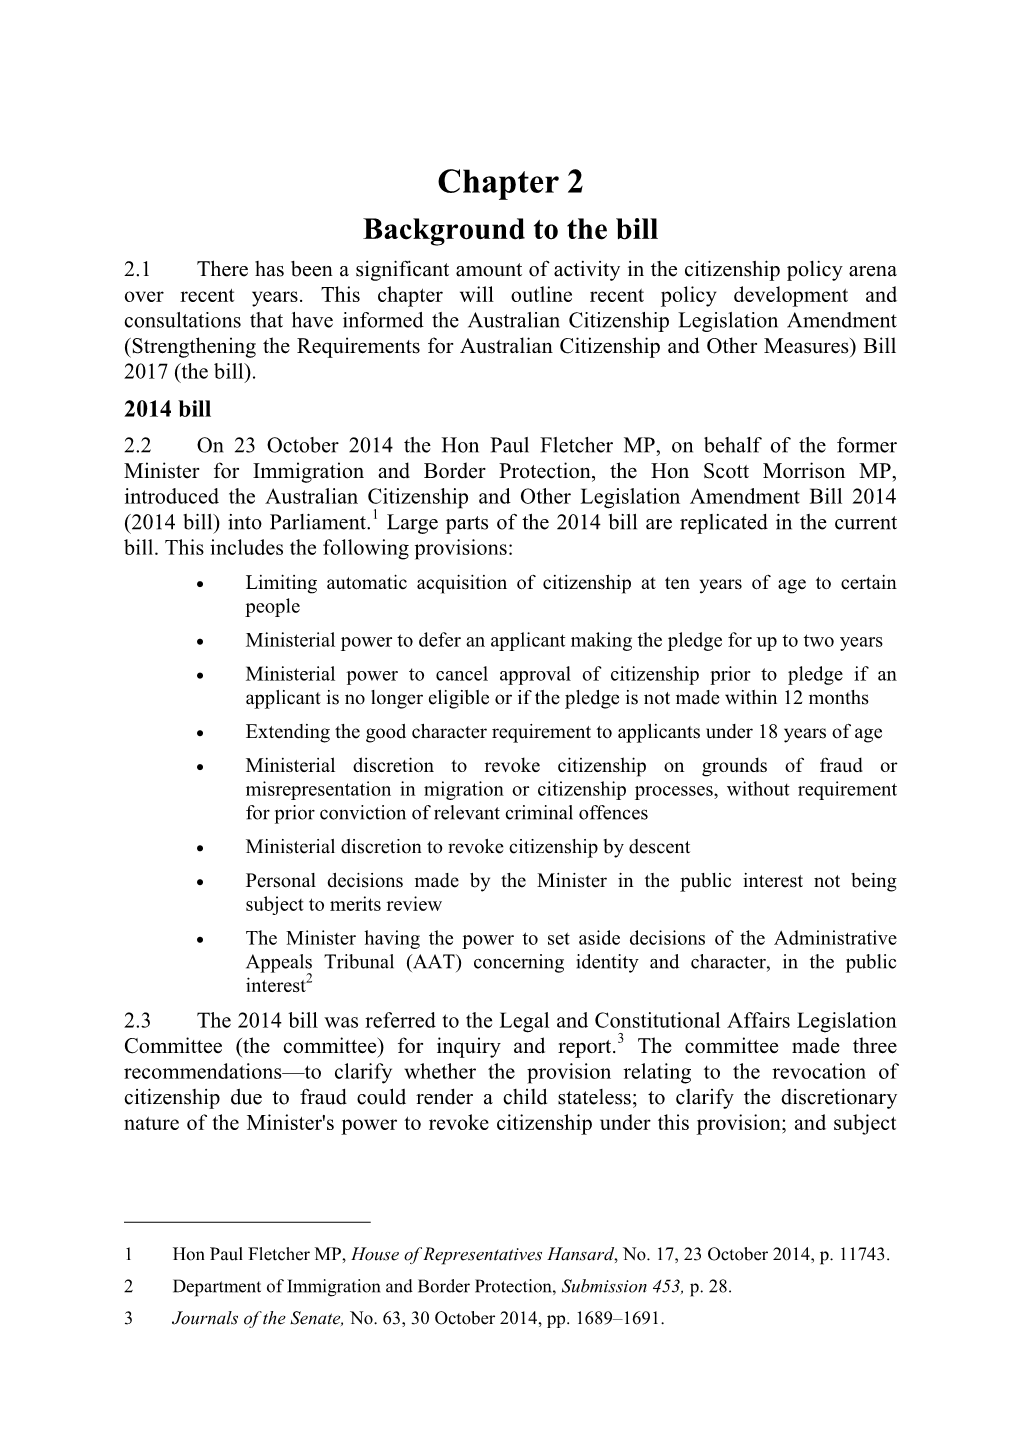 Australian Citizenship Legislation Amendment (Strengthening the Requirements for Australian Citizenship and Other Measures) Bill 2017 (The Bill)